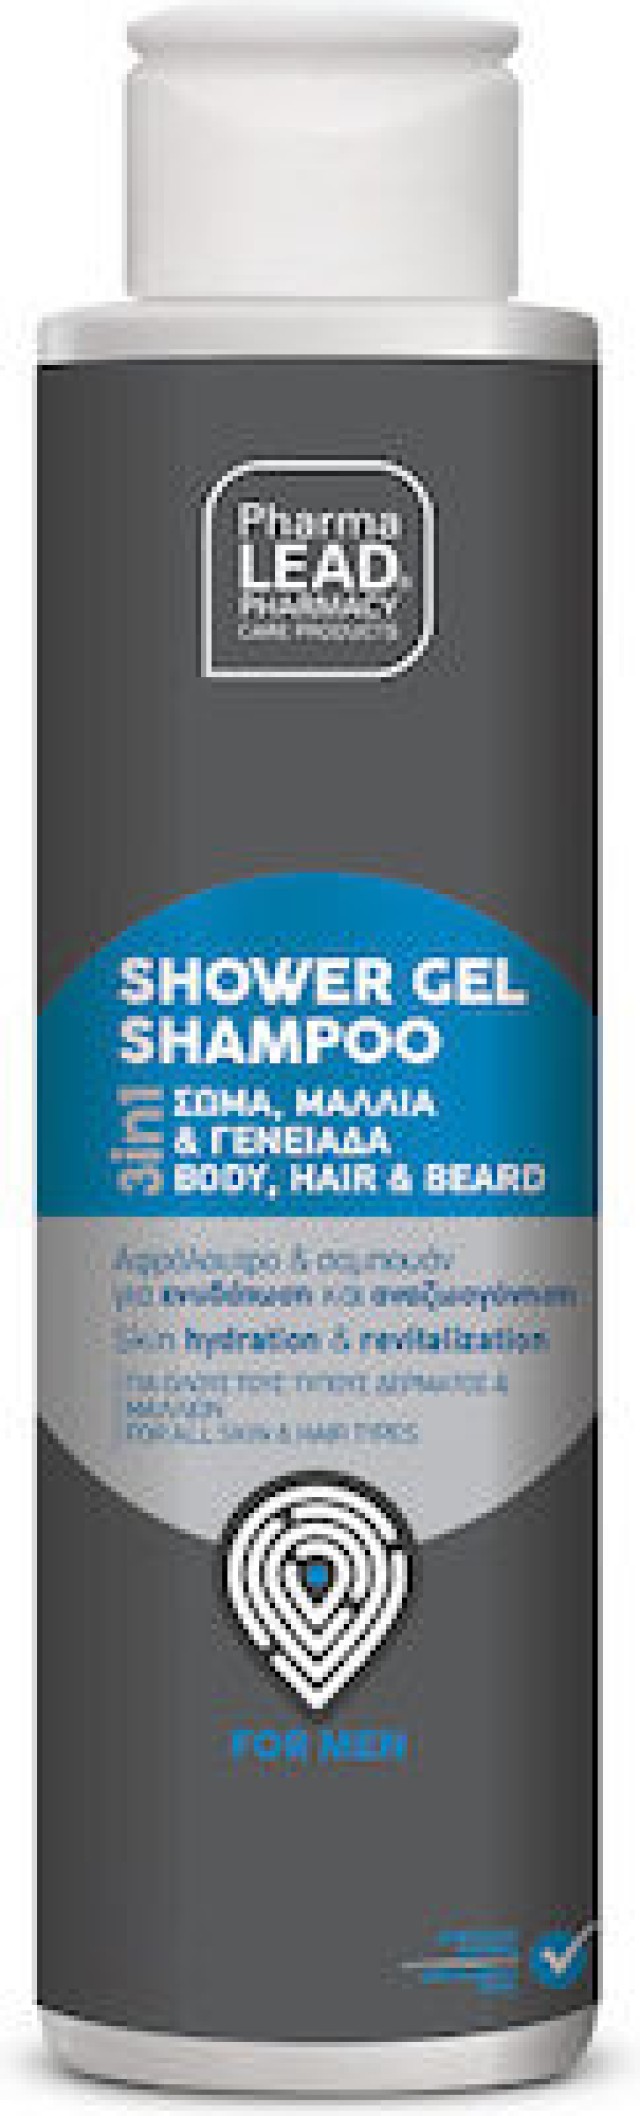 Pharmalead Men Shower Gel Shampoo 3in1 για Σώμα, Μαλλιά & Γενειάδα, 100ml